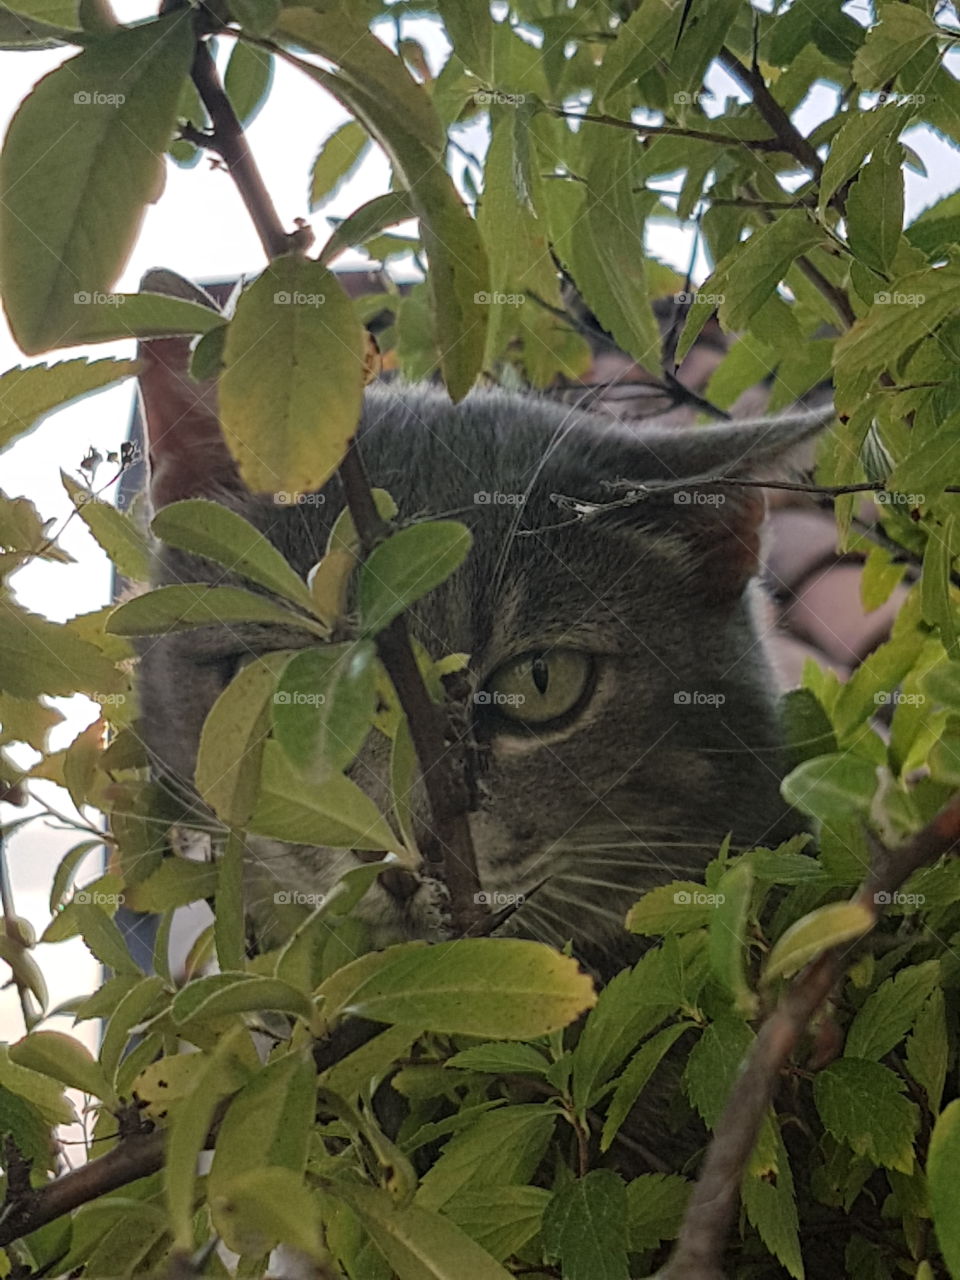 Peering cat hidden away among the leaves, green eyes